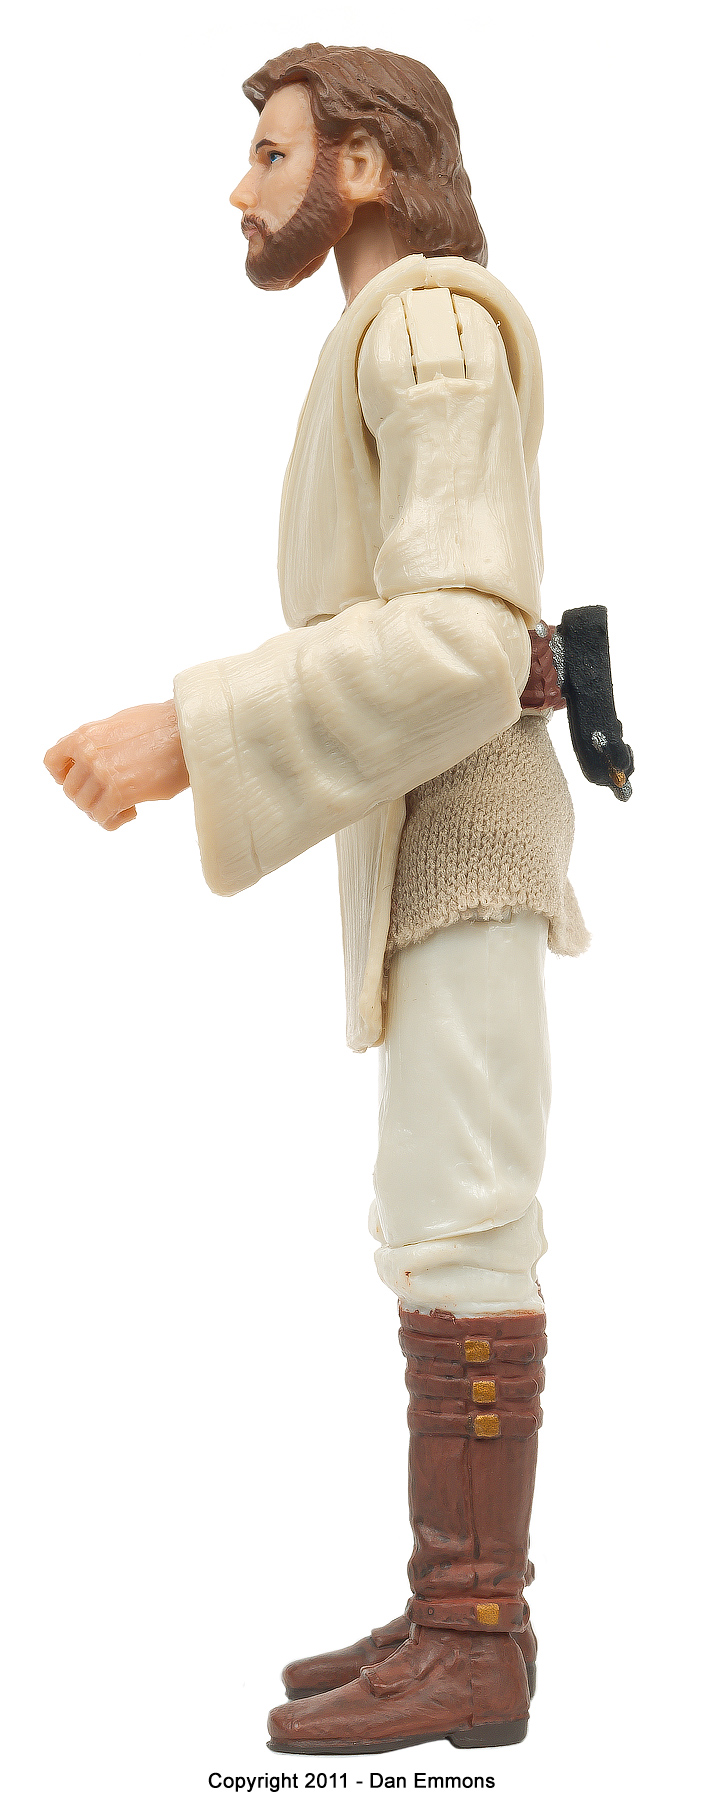 The Vintage Collection - VC31: Obi-Wan Kenobi